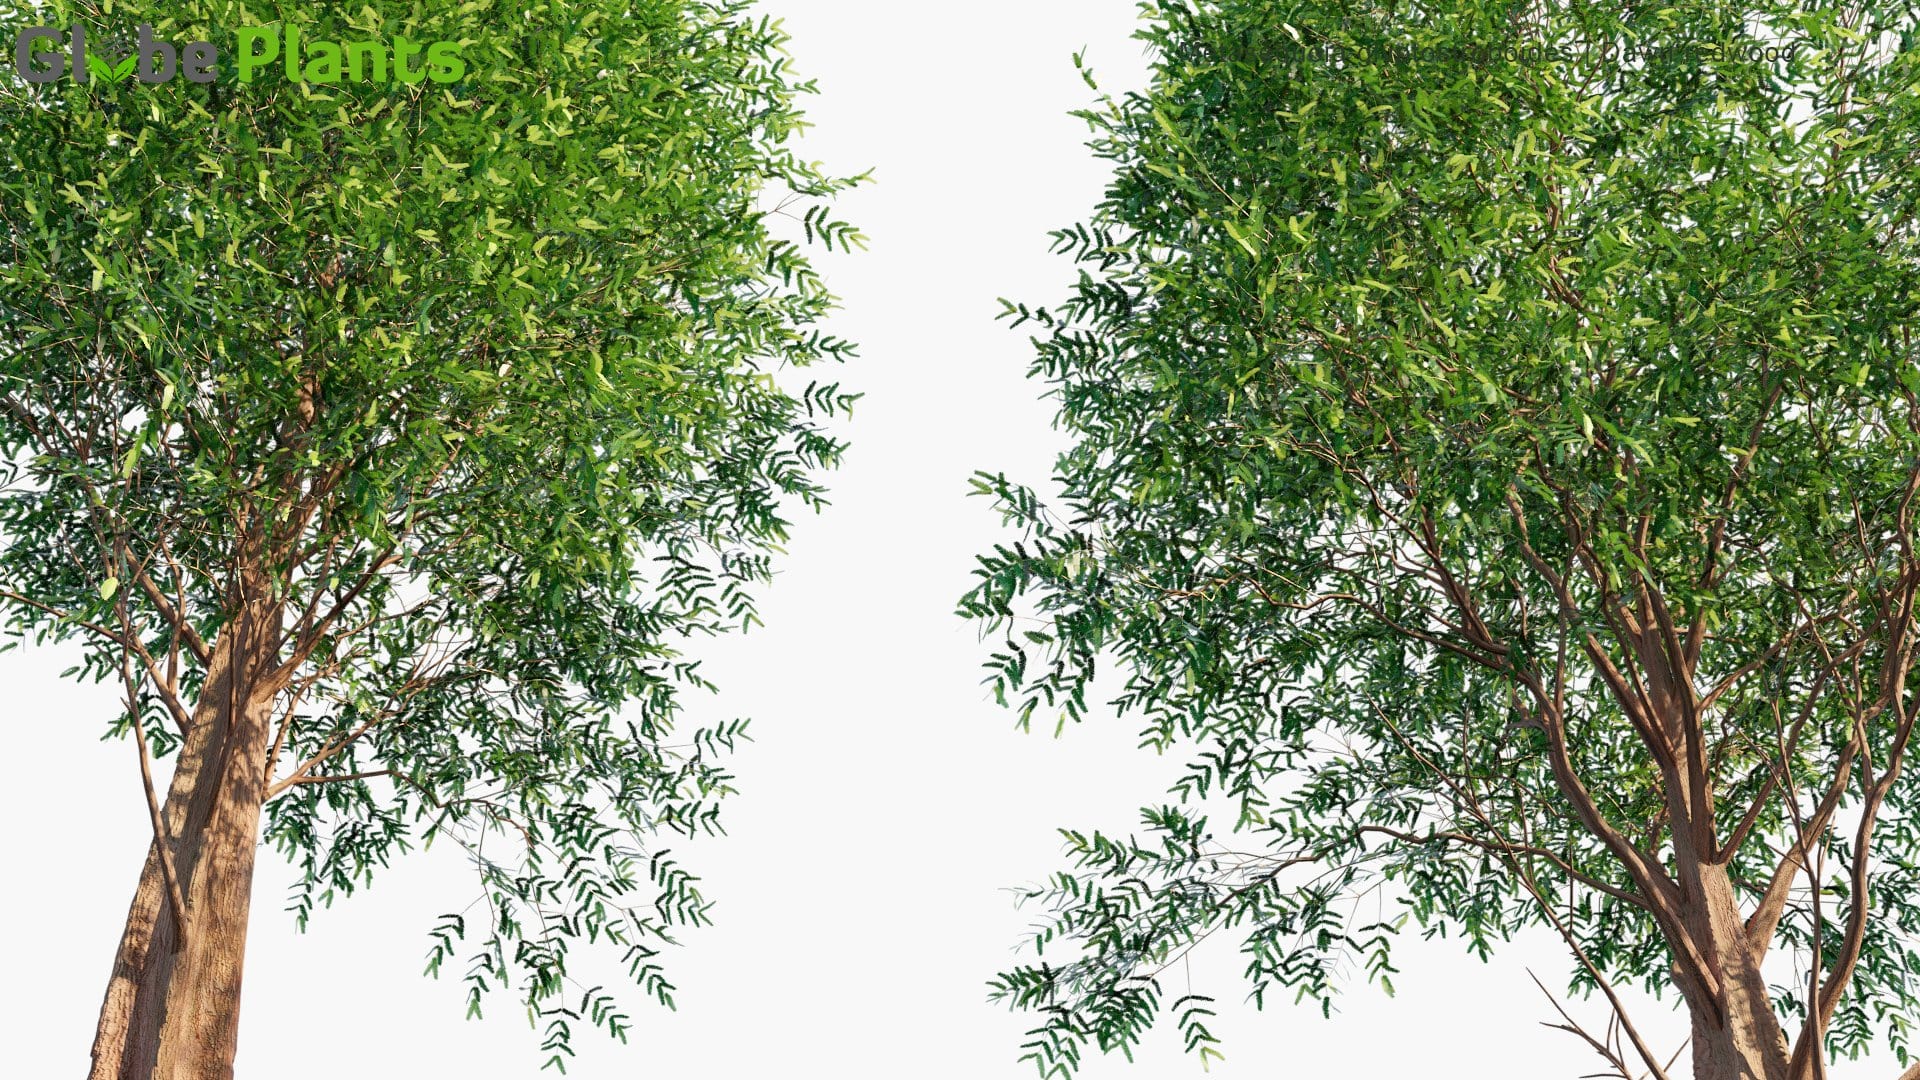 Metasequoia Glyptostroboides 3D Model